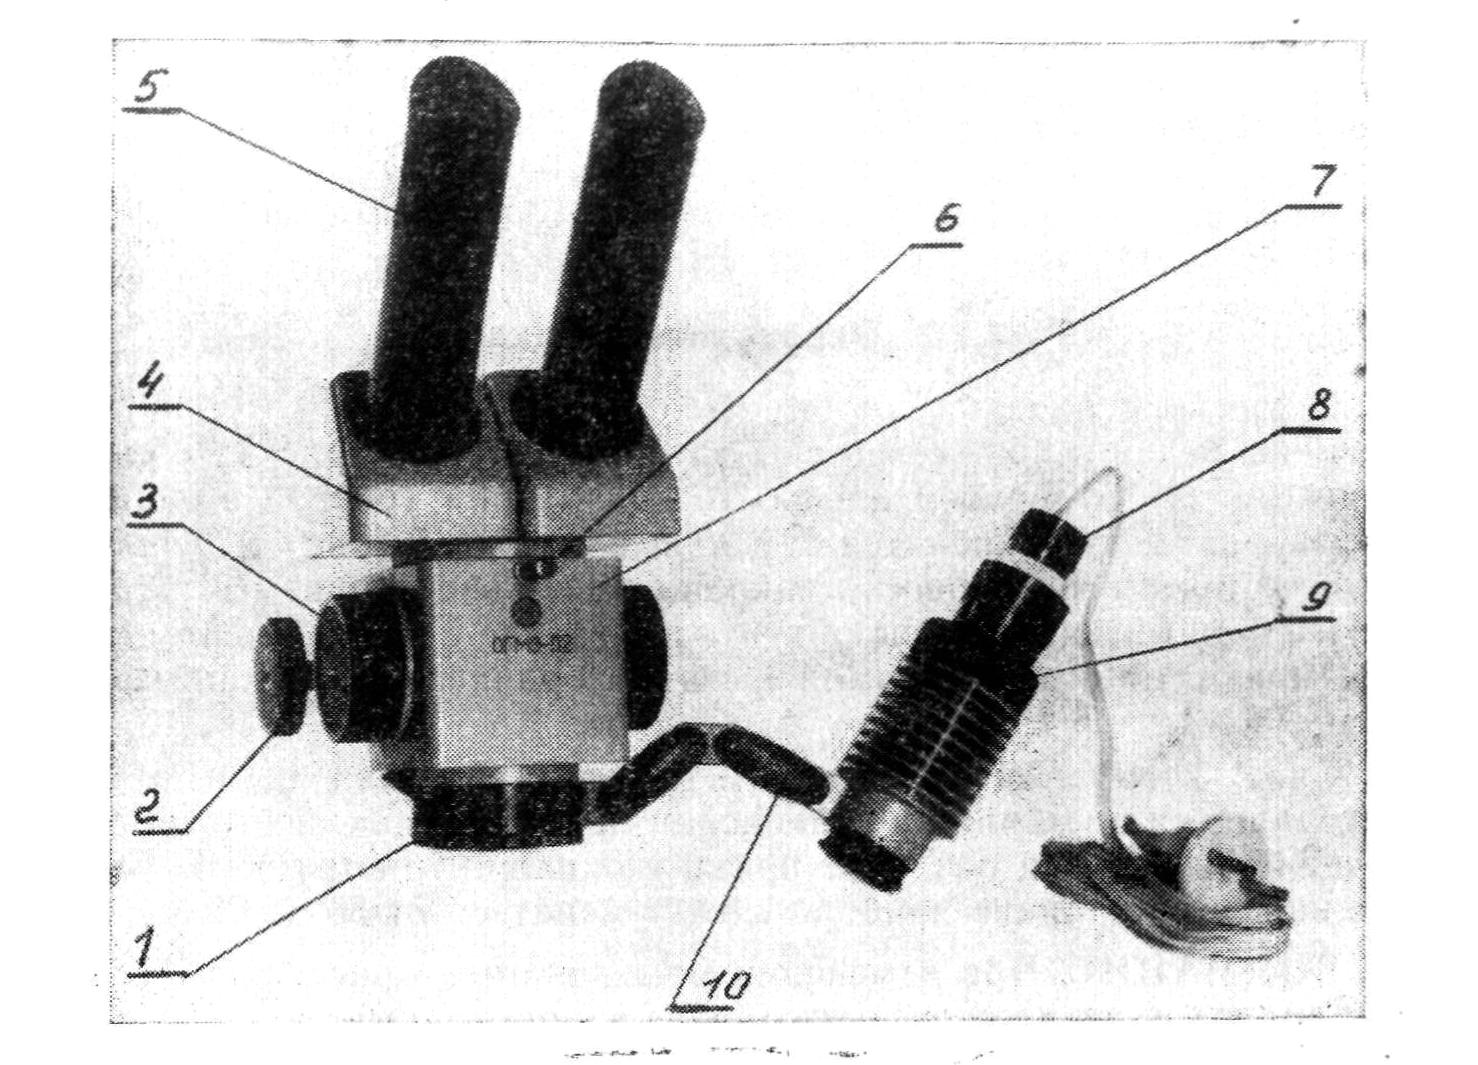 головка микроскопа огмэ-п2 рис.2